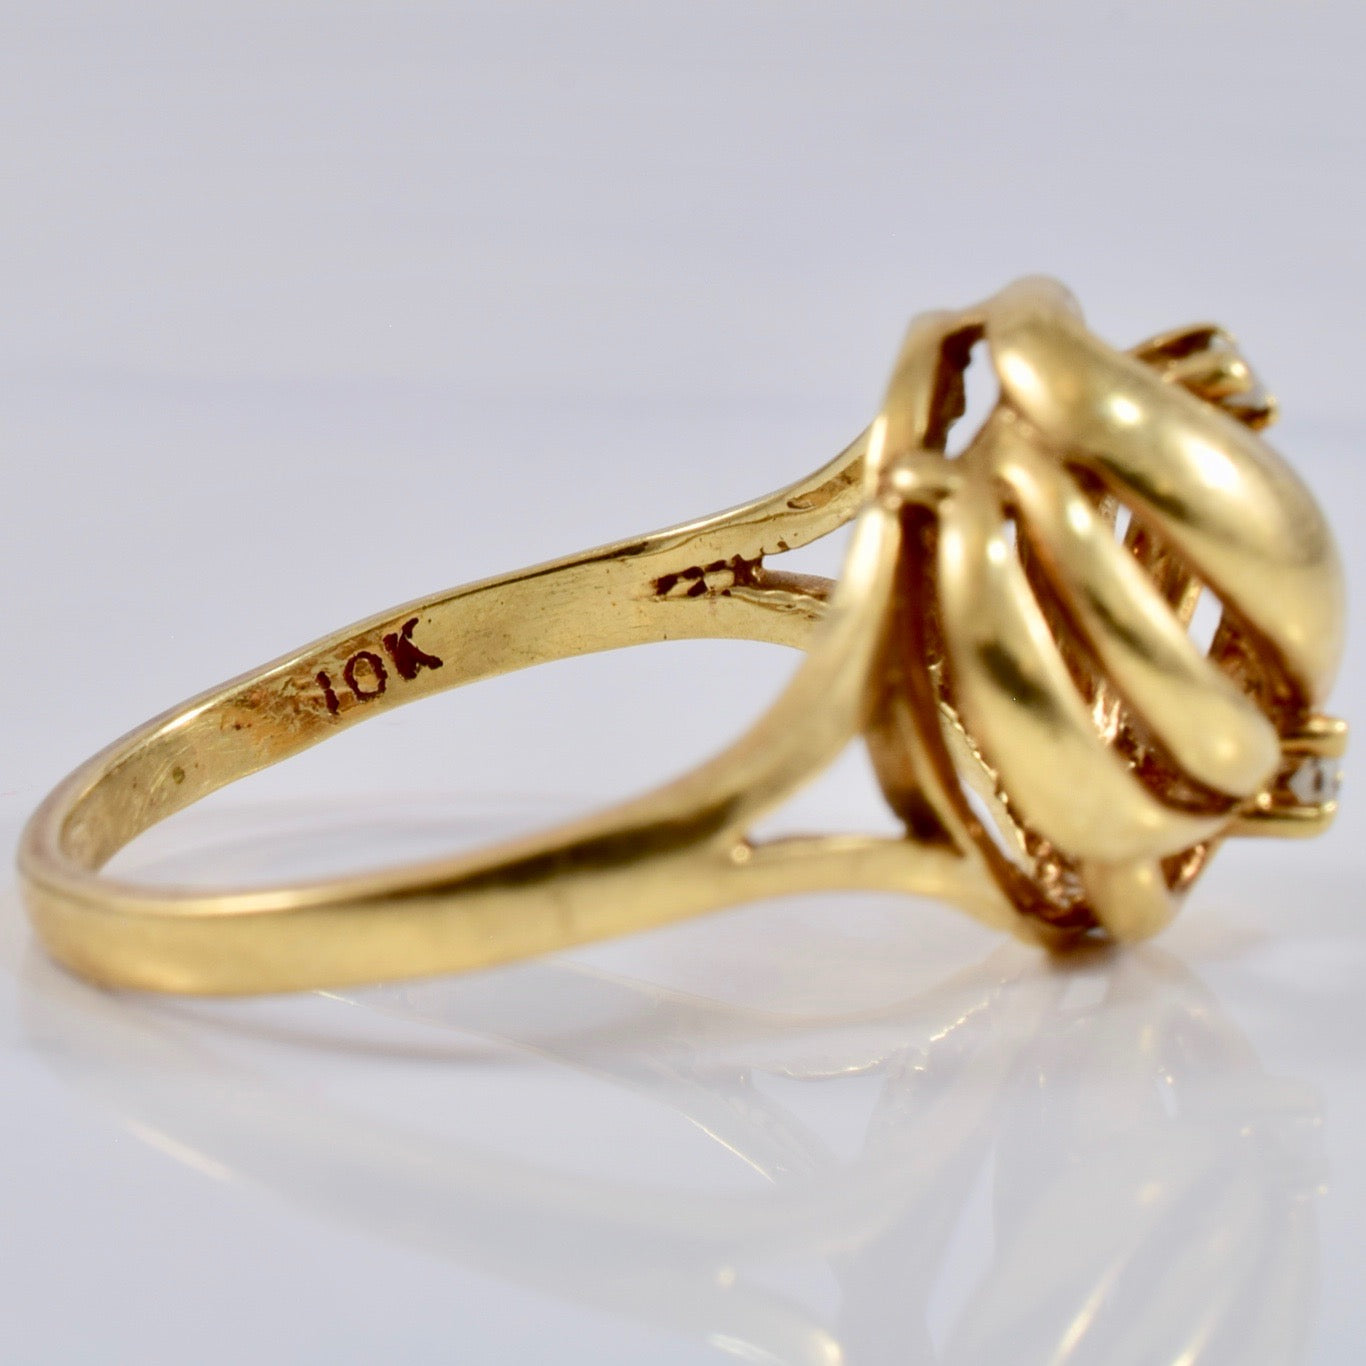 Vintage Gold and Diamond Ring | 0.03 ctw SZ 7 |